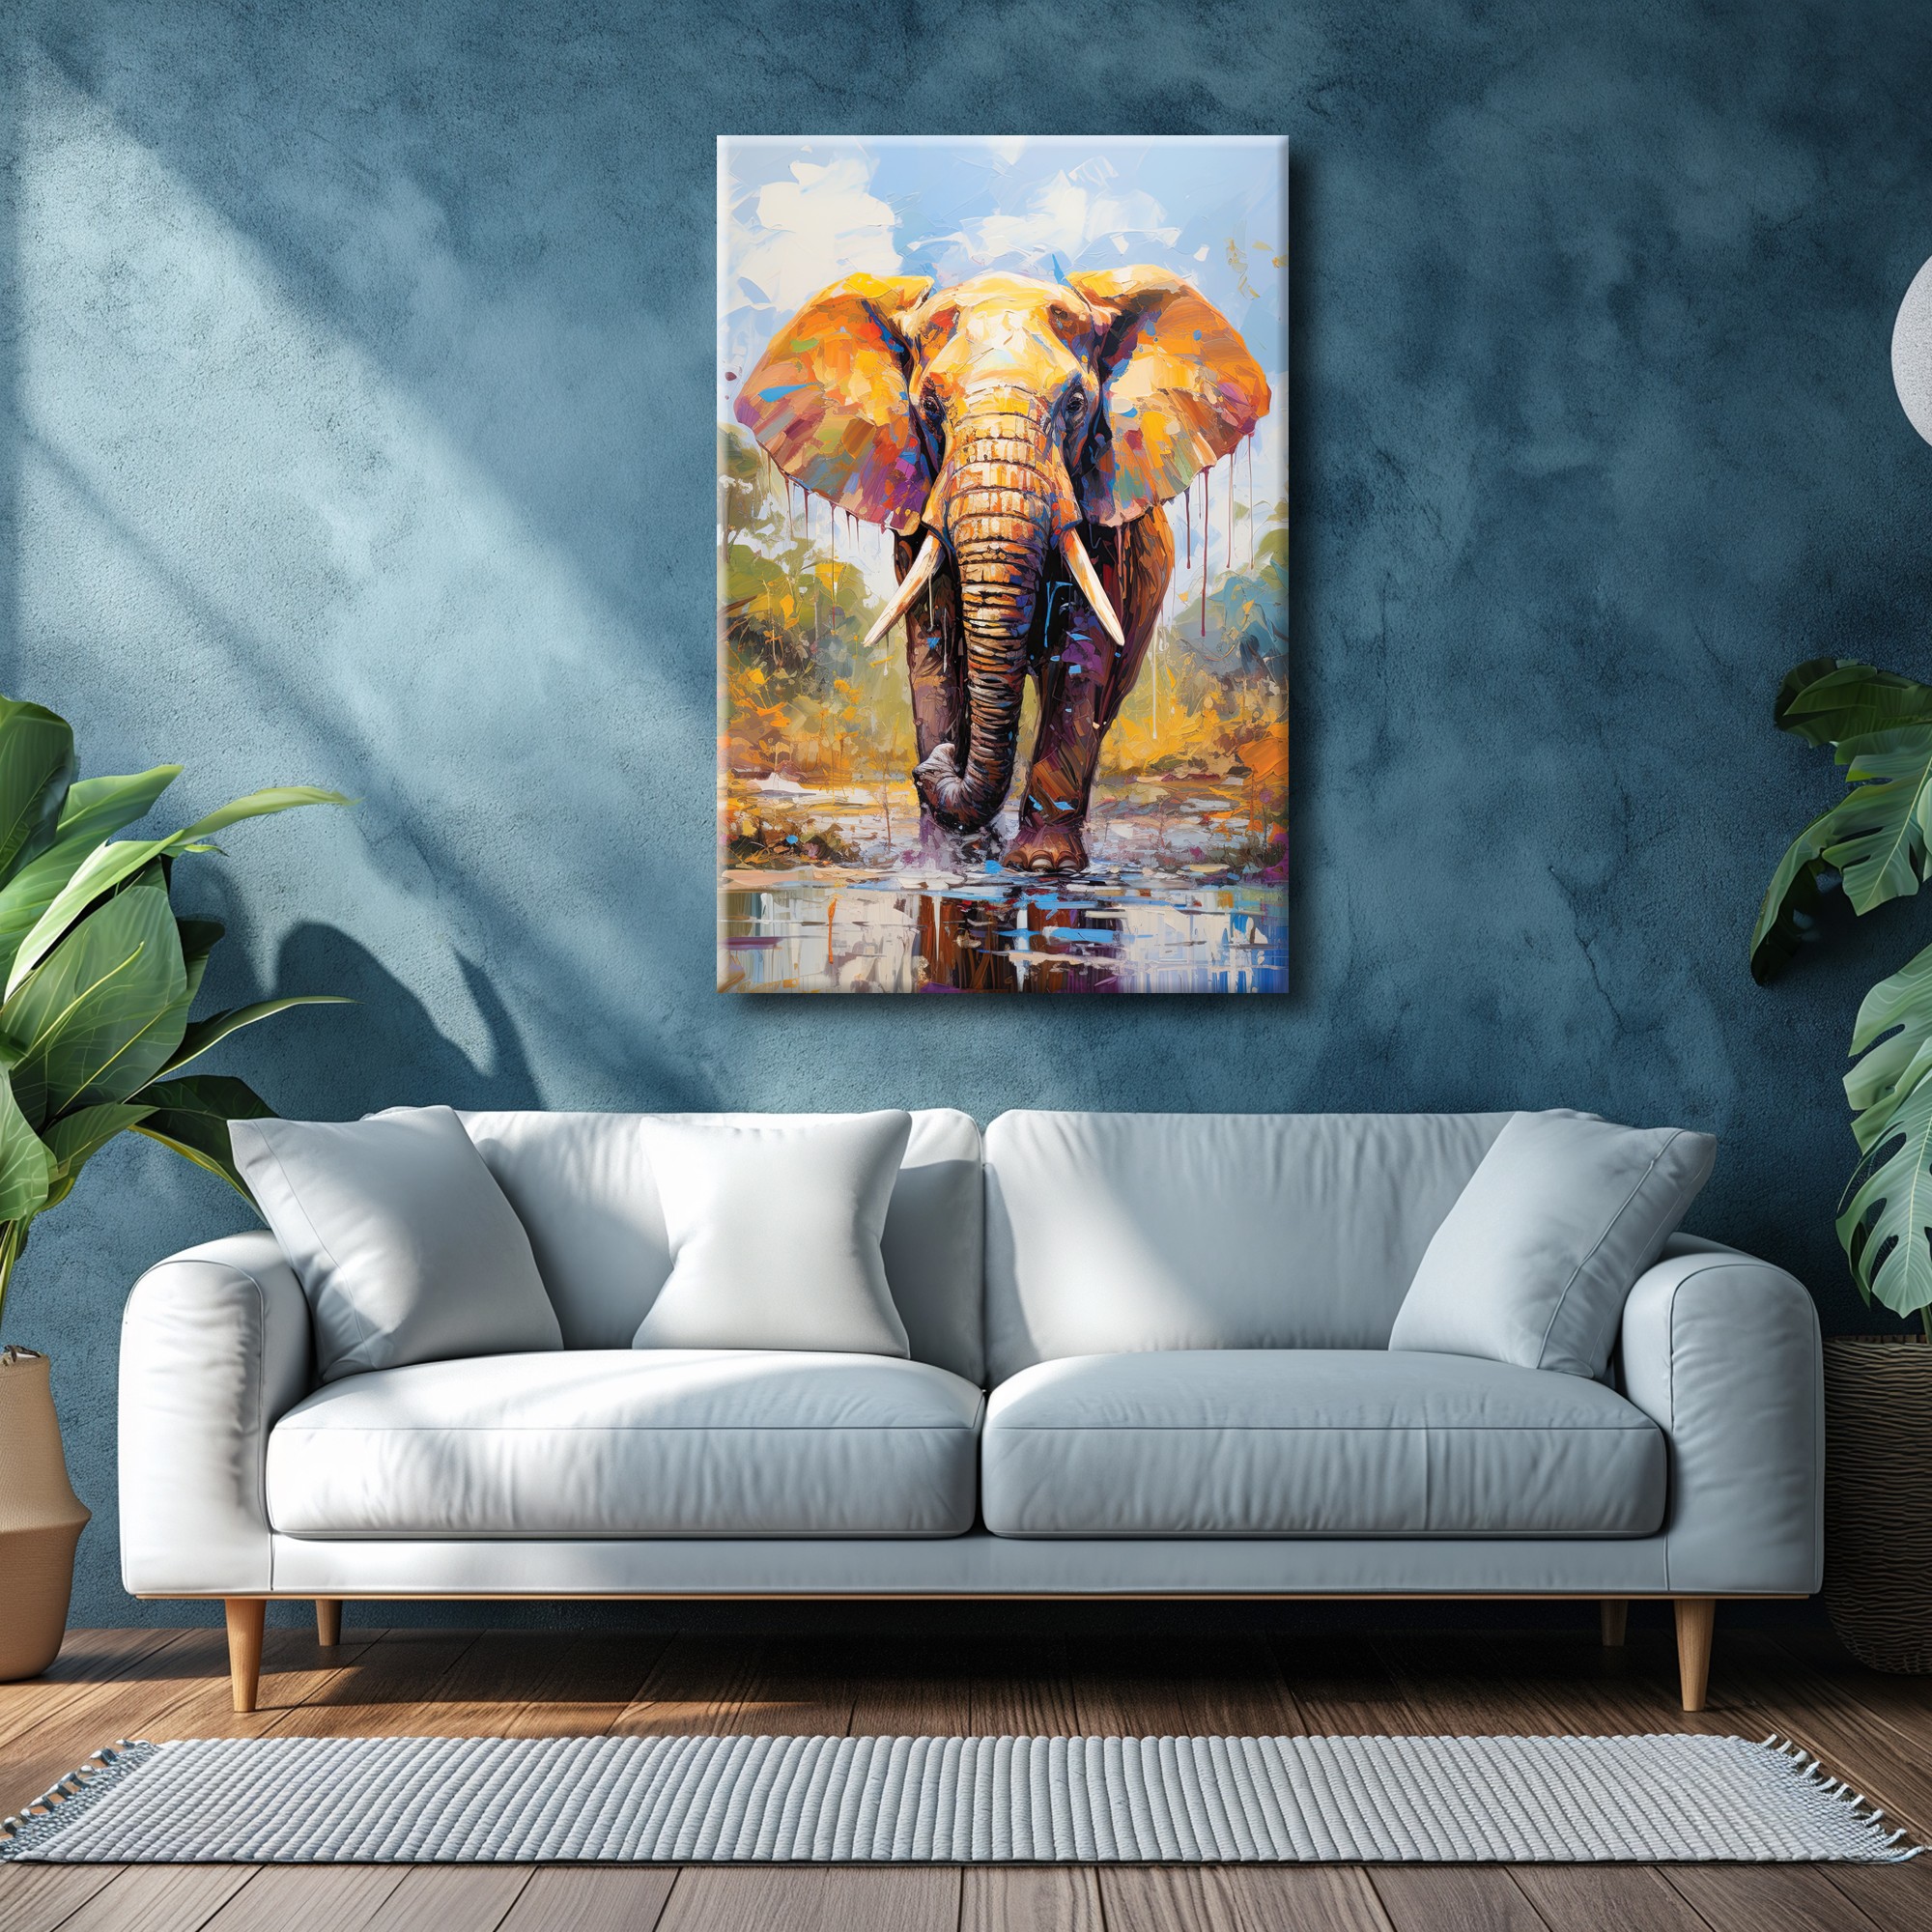 Renkli Fil Tam - Colorful Elephant Full